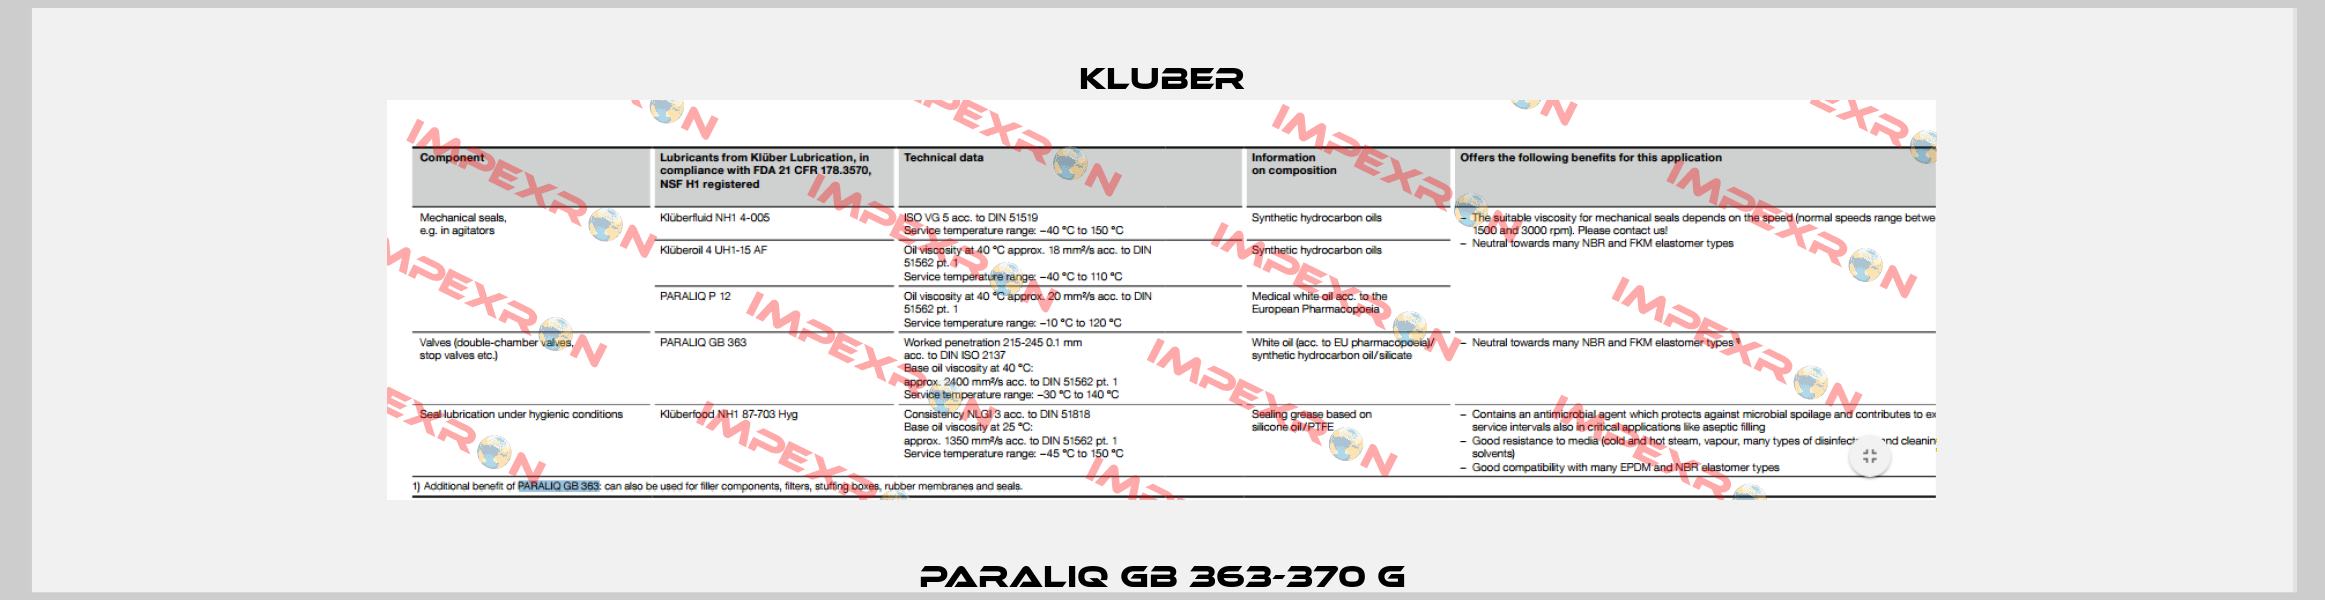 PARALIQ GB 363-370 g Kluber